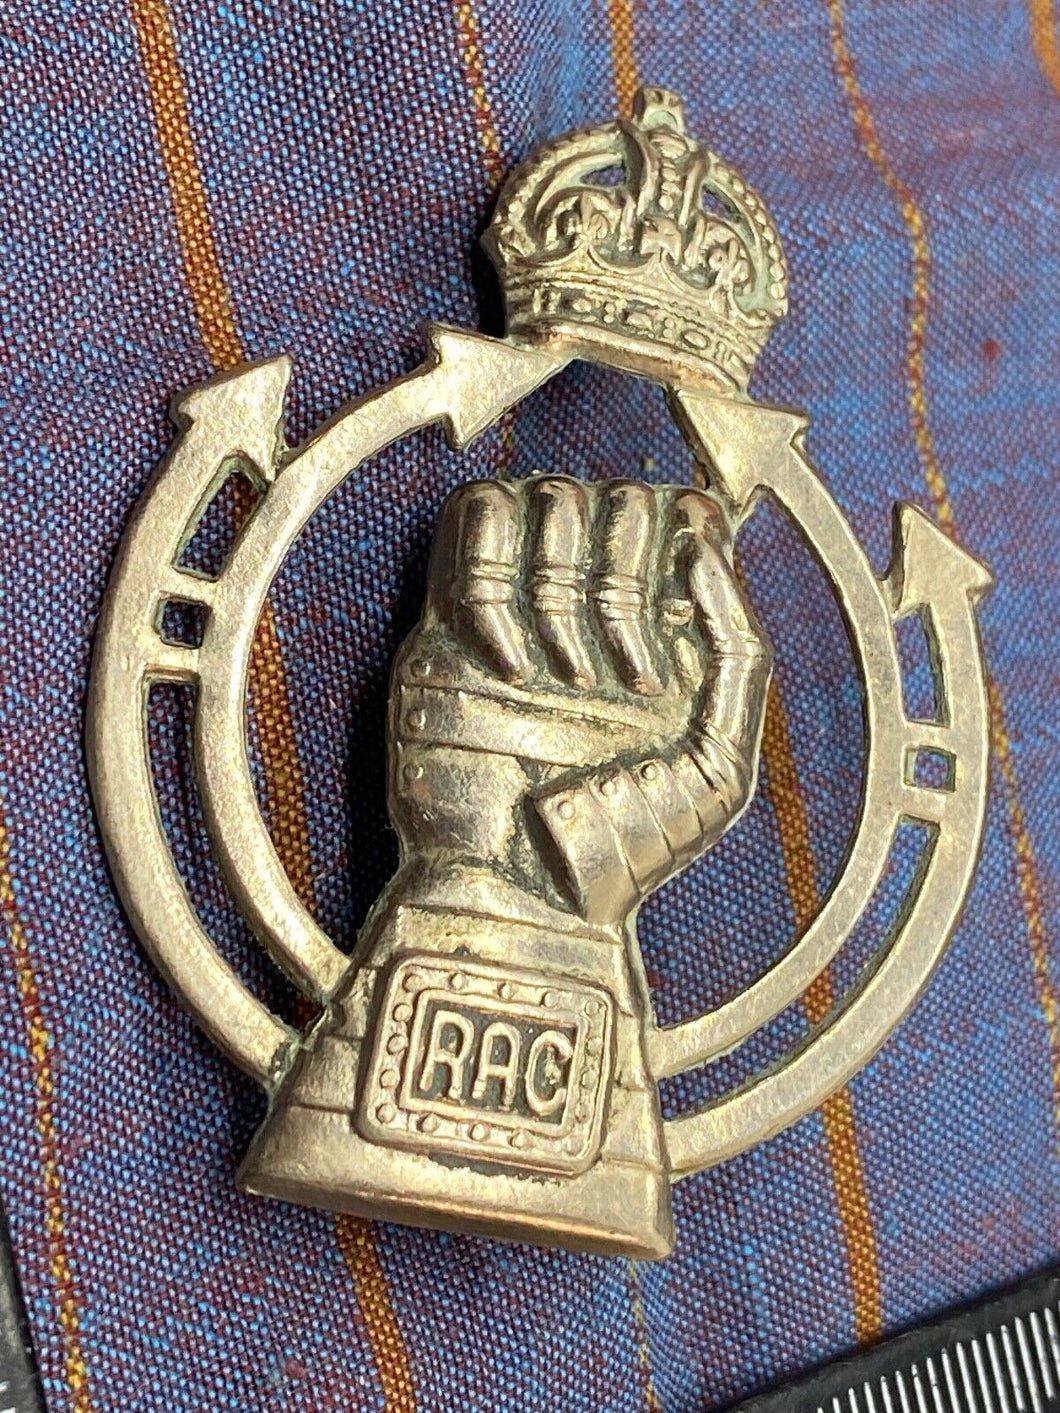 Original British Army WW2 British Army Royal Armoured Corps Cap/Collar Badge